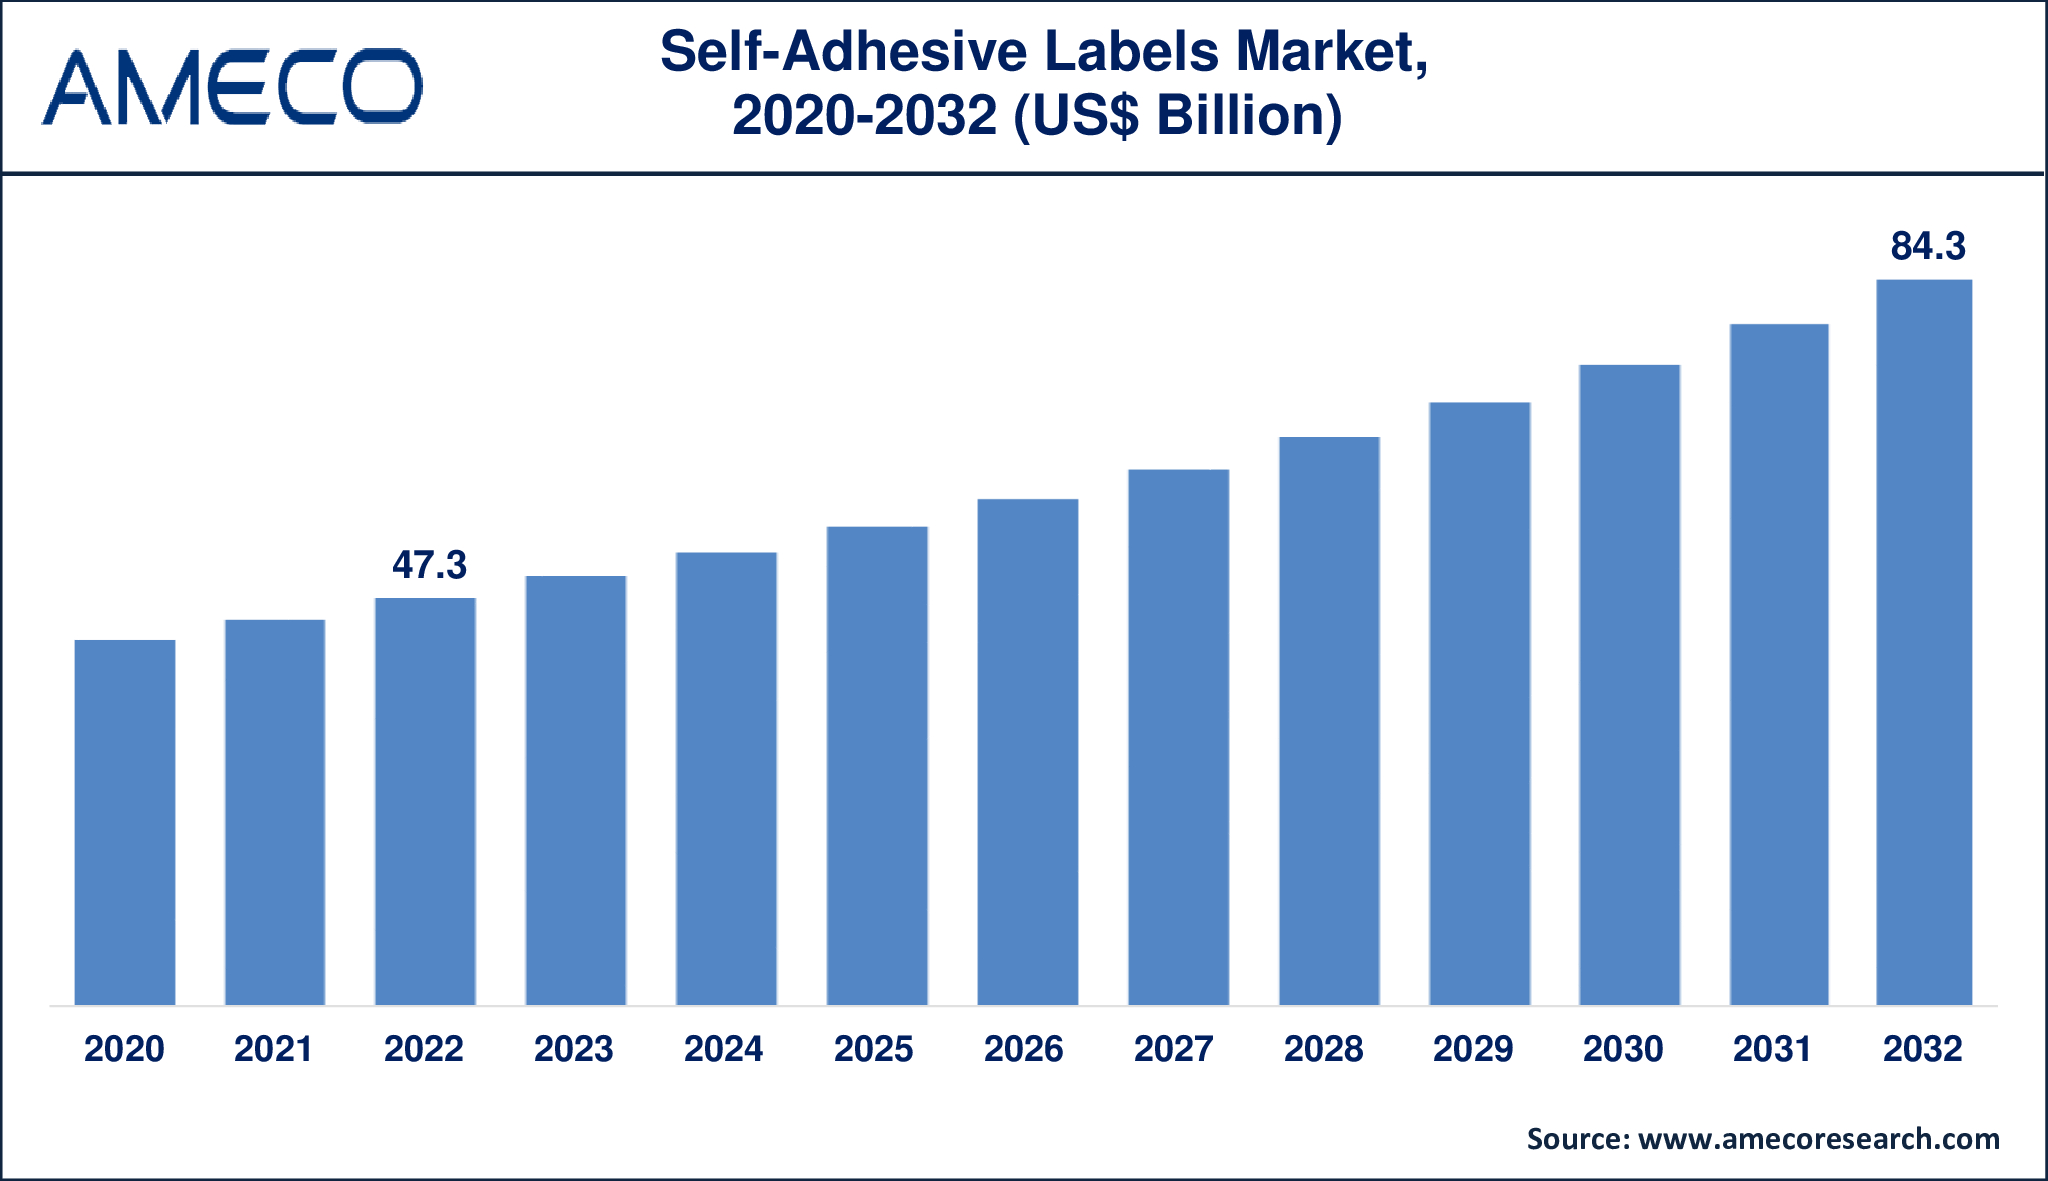 Self-Adhesive Labels Market Dynamics